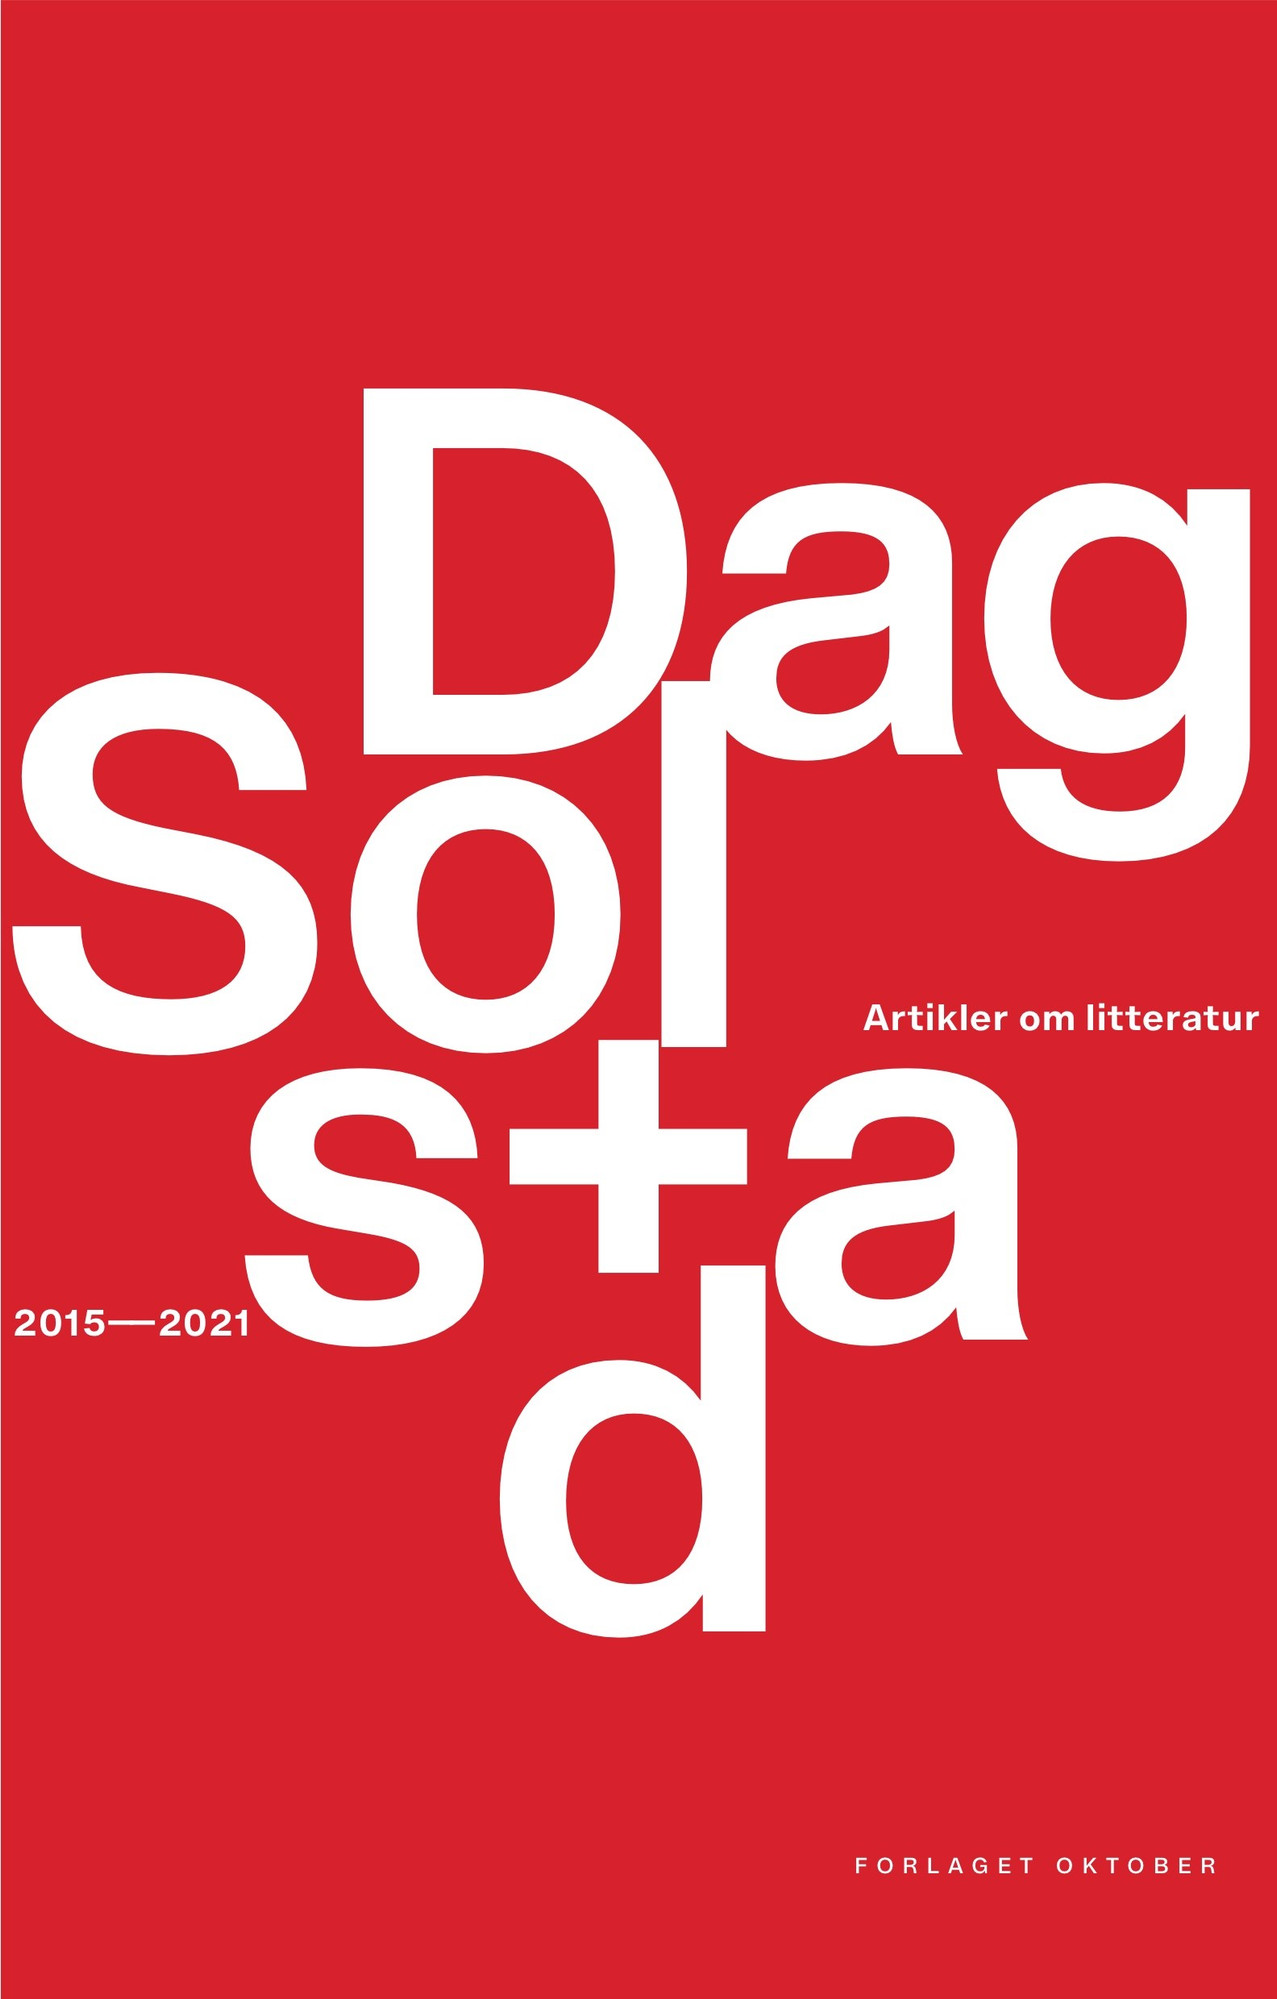 Bokomslag til Dag Solstads "Artikler om litteratur 2015-2021".